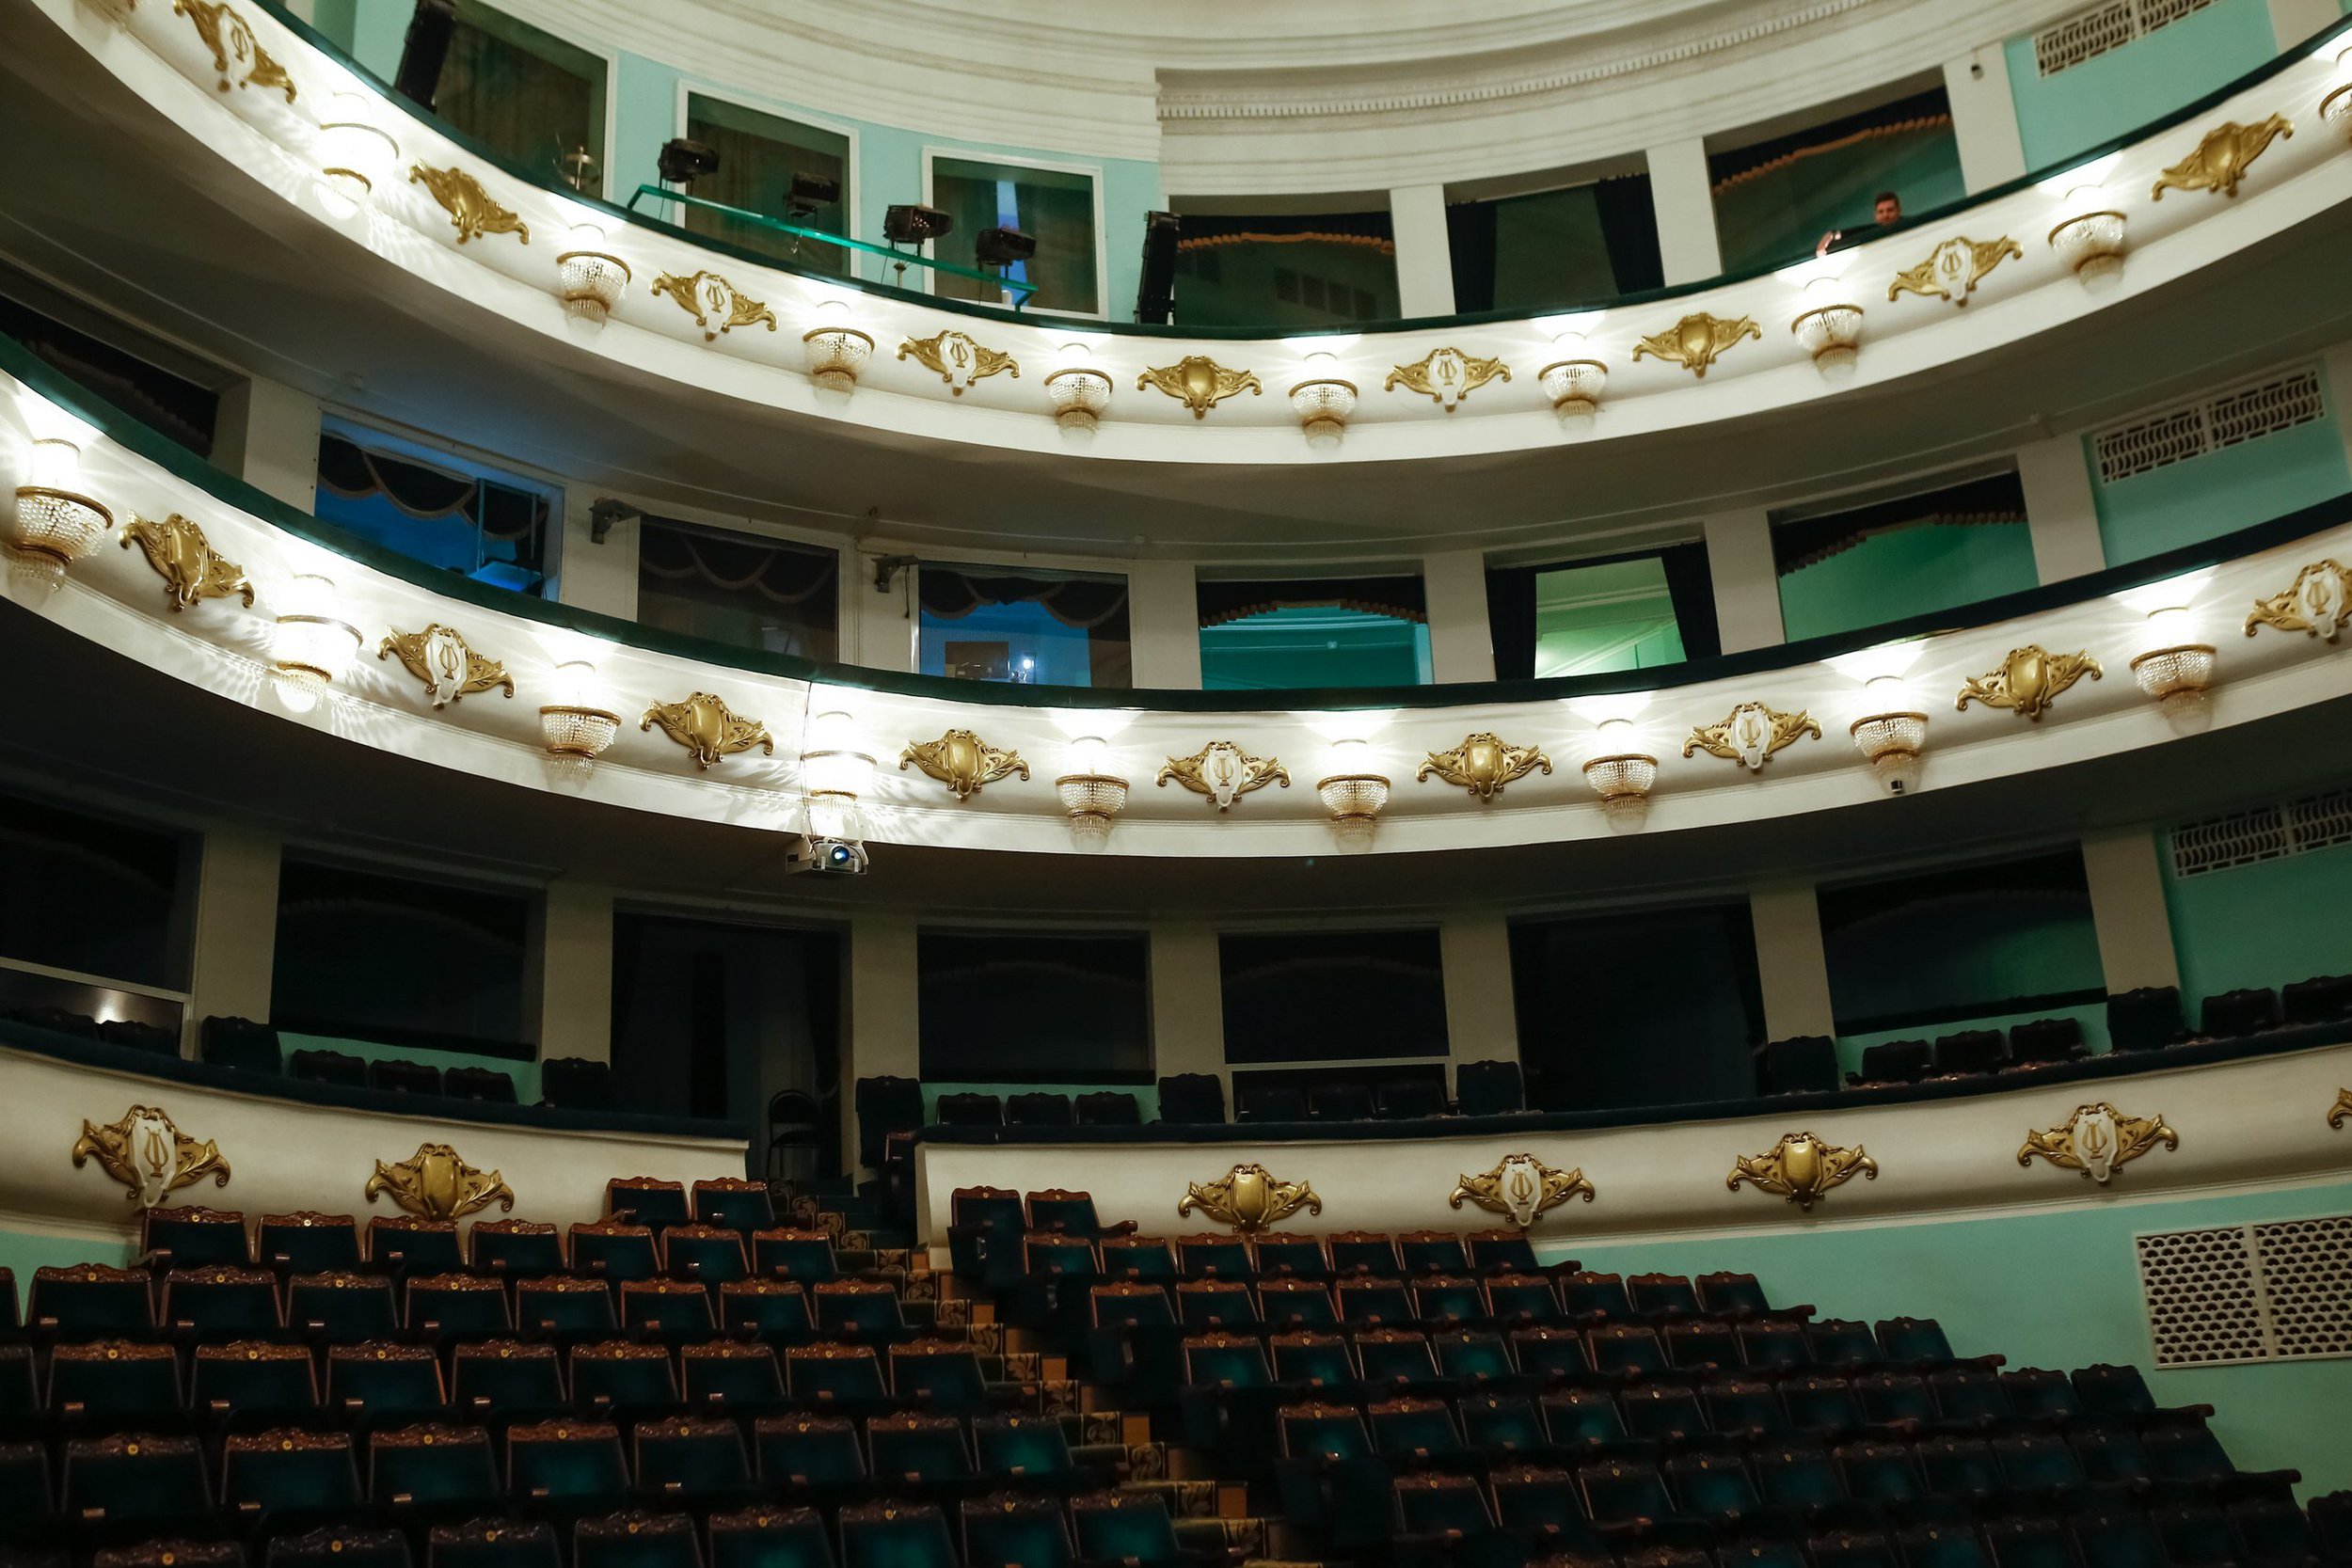 Царицынская опера волгоград фото зала внутри фото